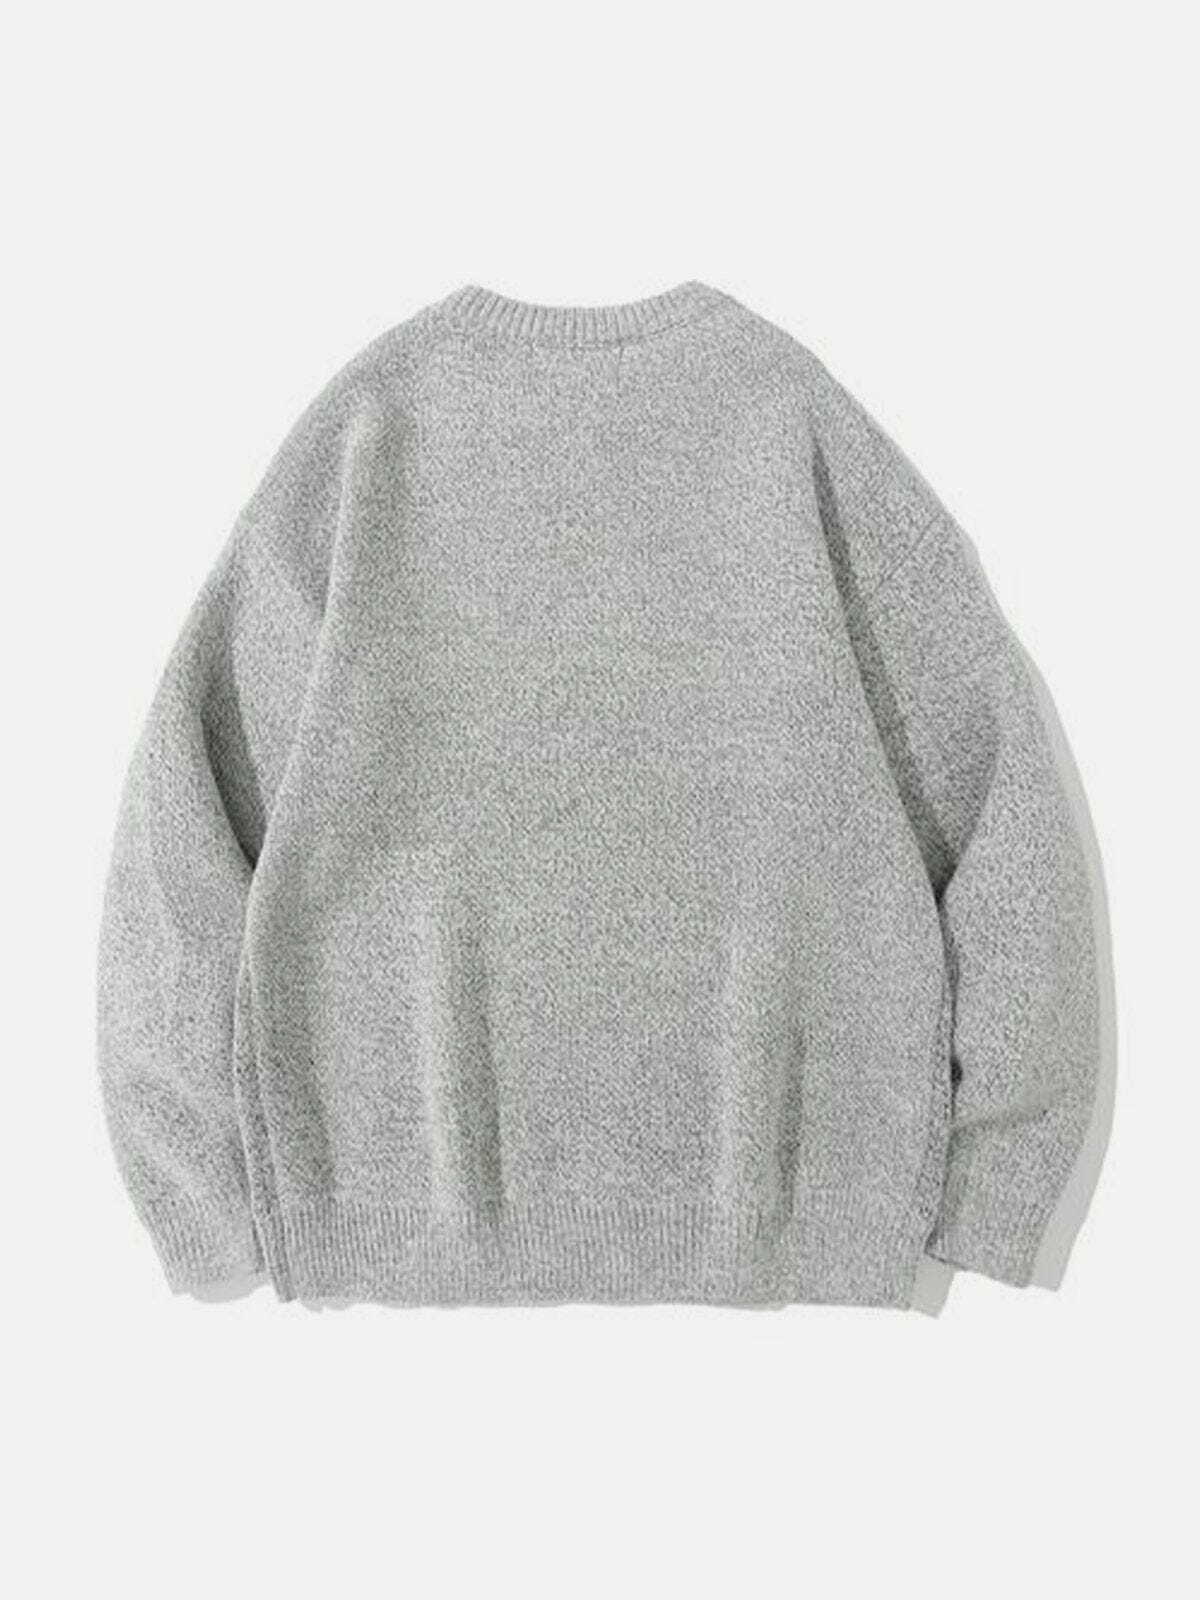 anime shark sweater jacquard design youthful & trendy 3065